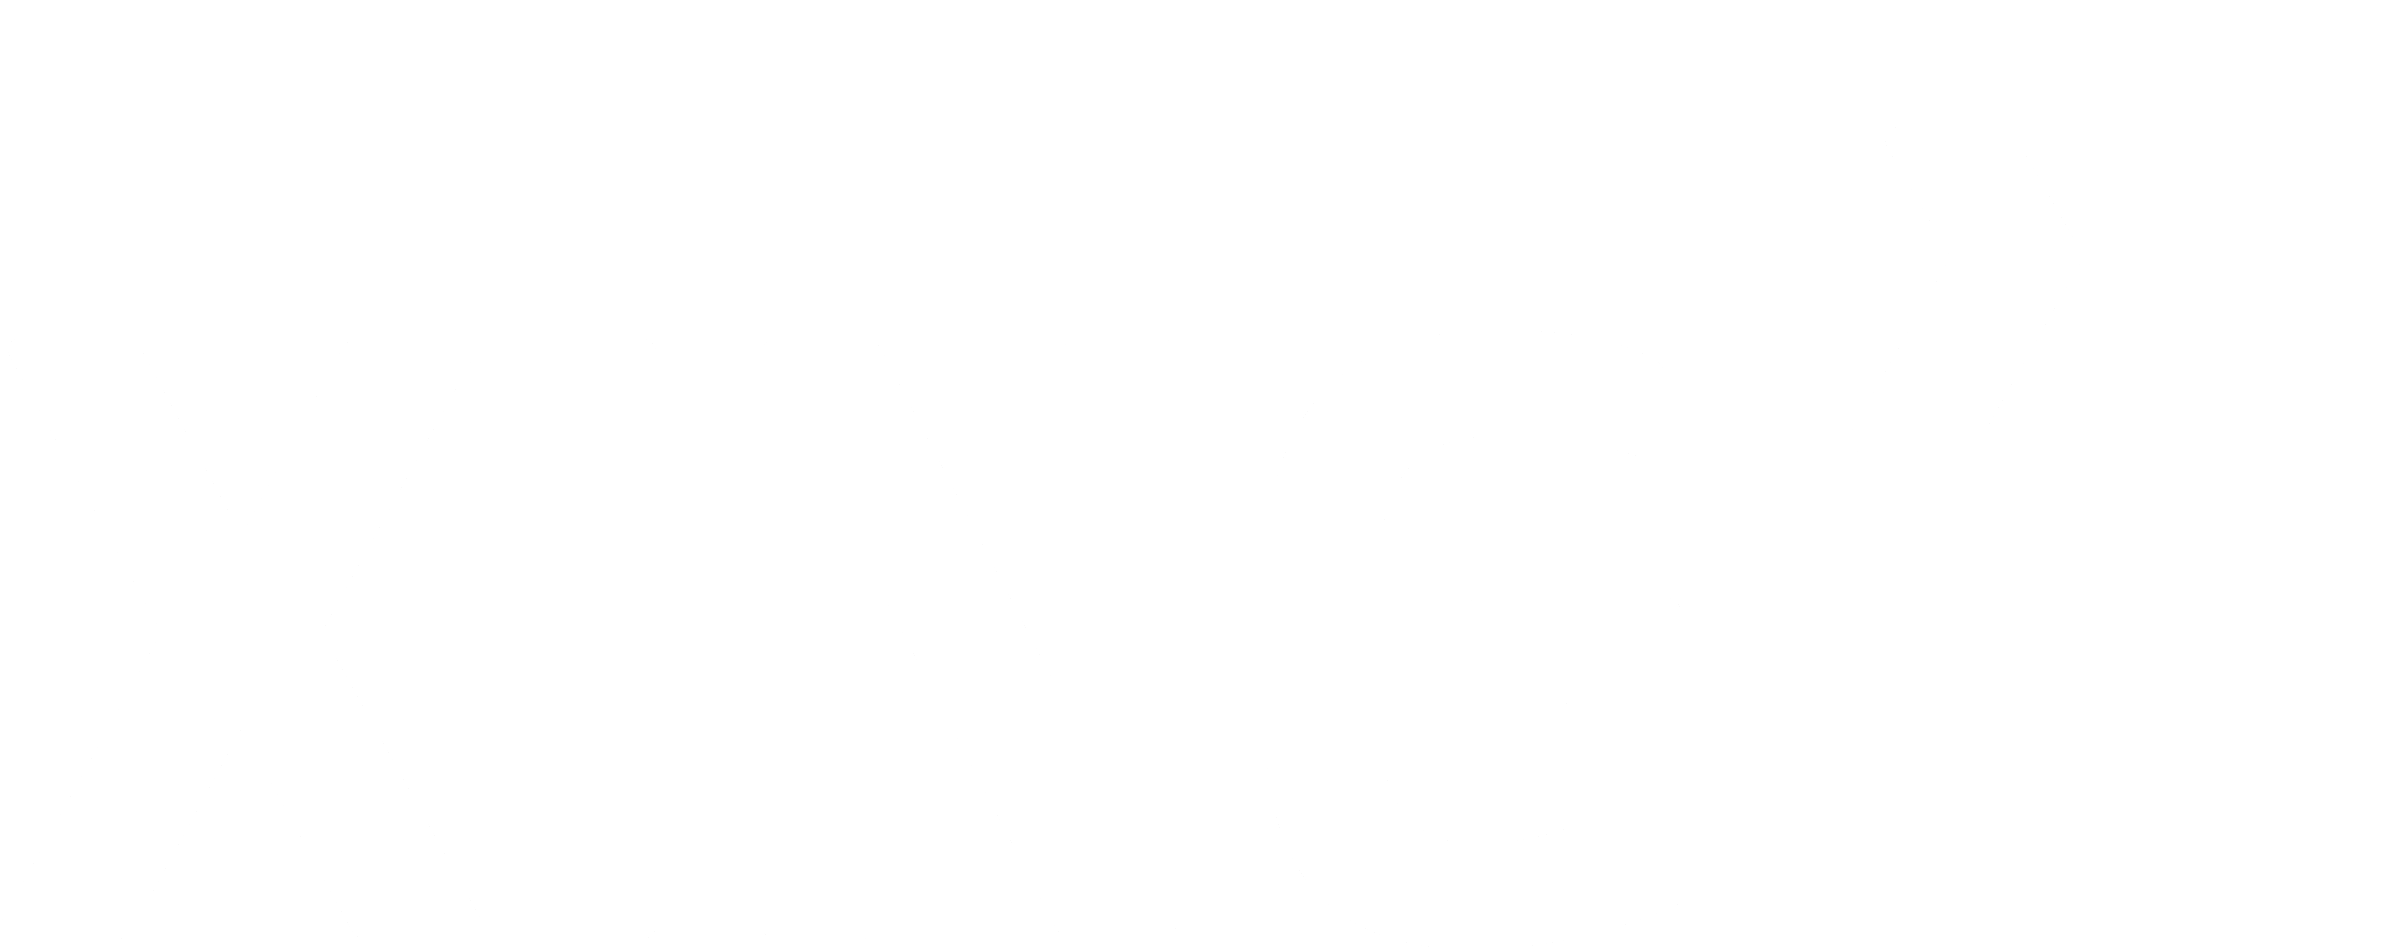 Xing Logo - Xing Logo PNG Transparent & SVG Vector